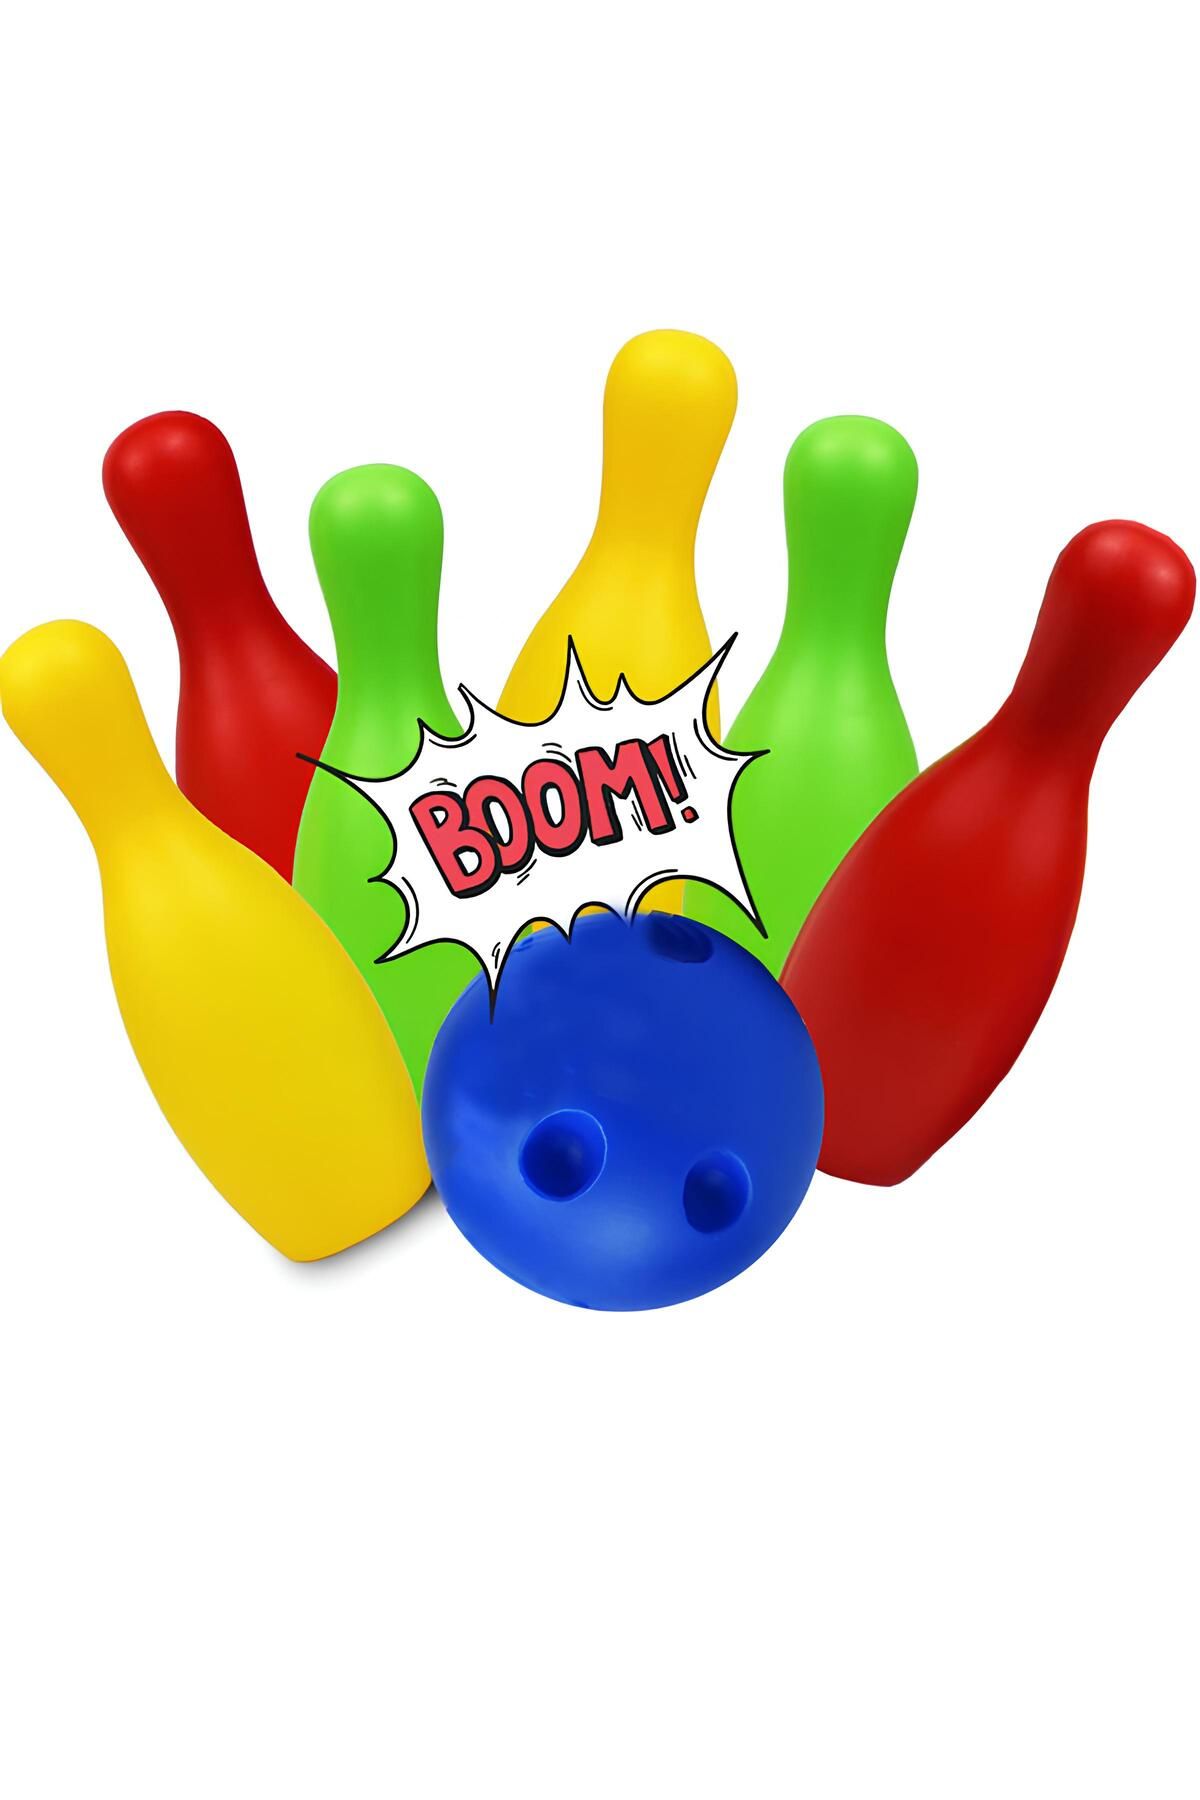 Factorial Bowling Denge Oyunu Seti 8 Labut  Bowling Topu Spor Oyunları 1 2 yas Bebek Oyuncak